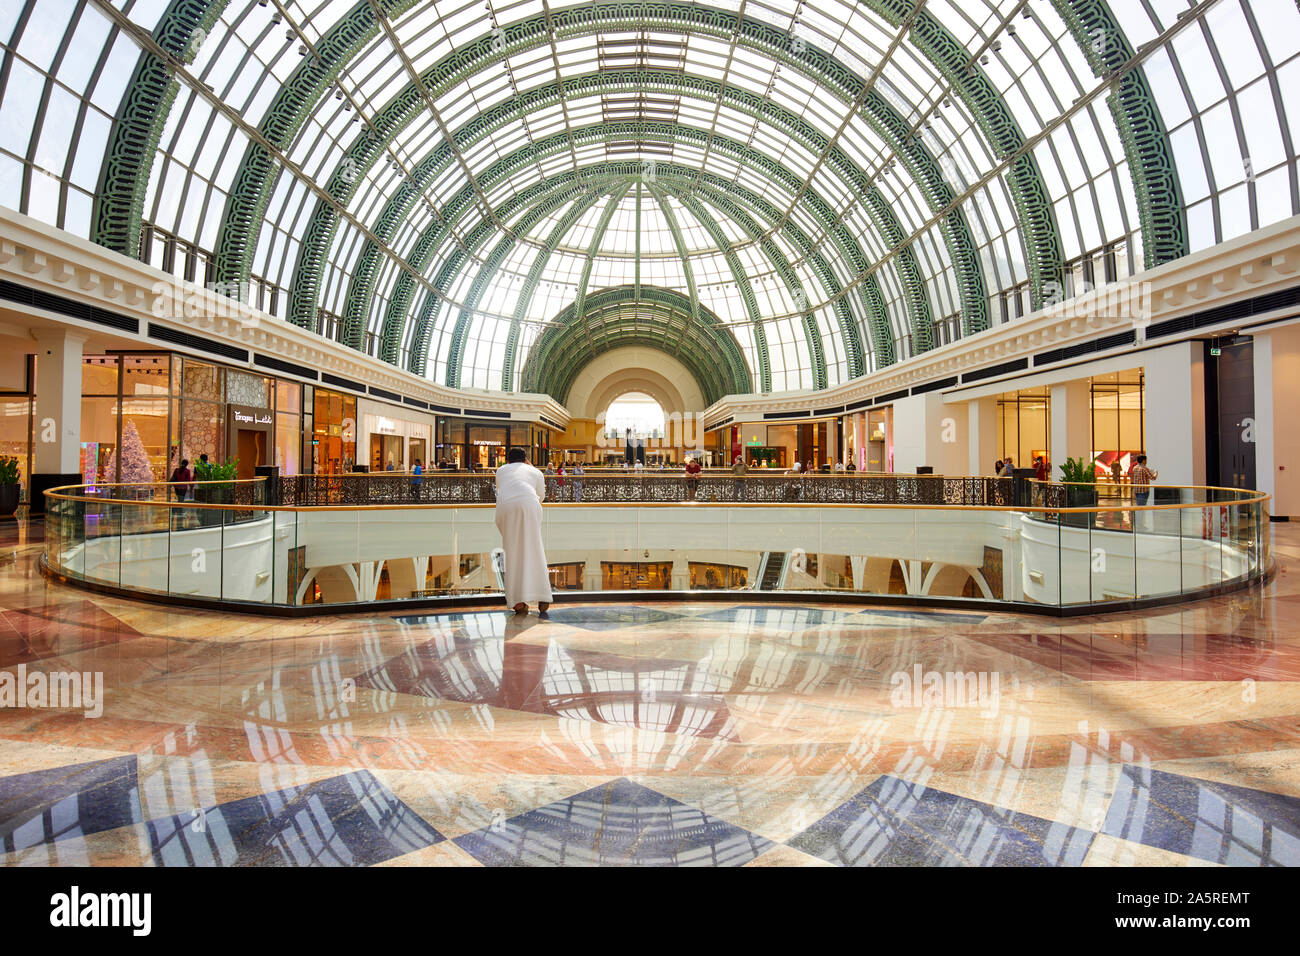 The architecture of the Mall of th Emirates, Dubai, United Arab Emirates Stock Photo